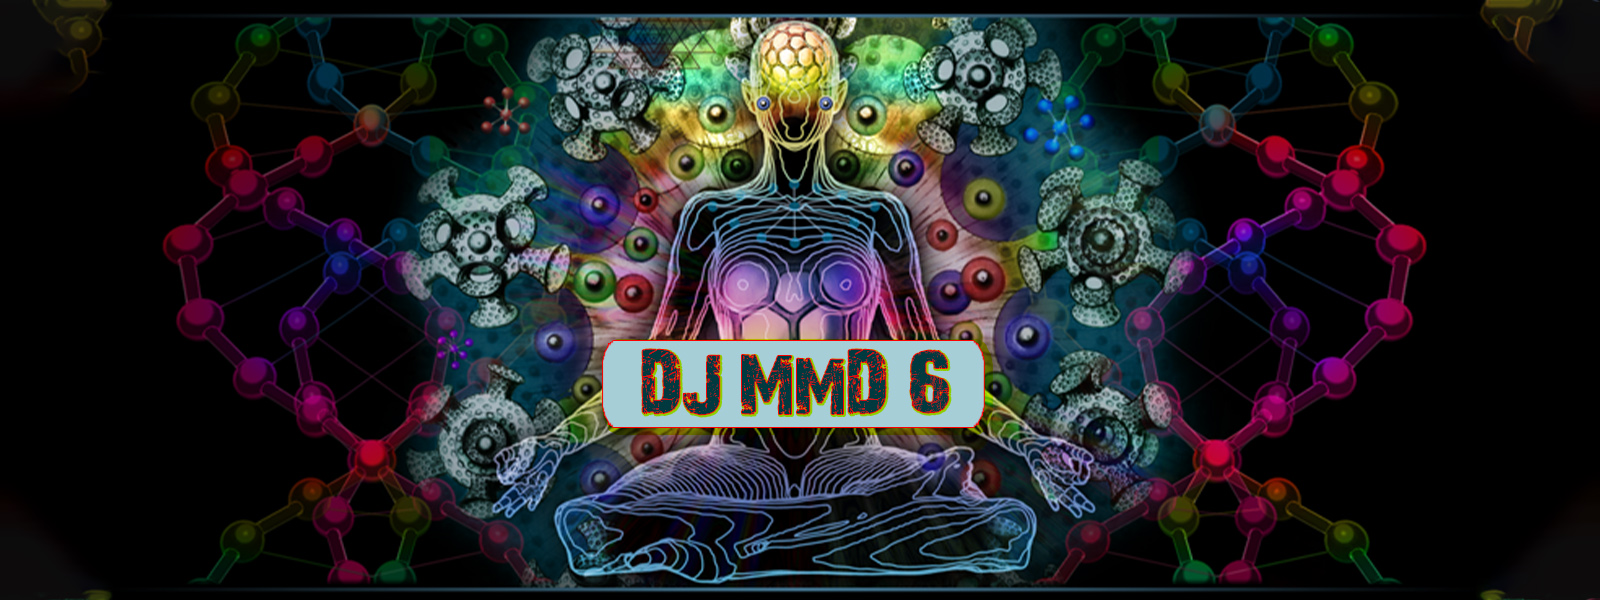 DJ MmD 6